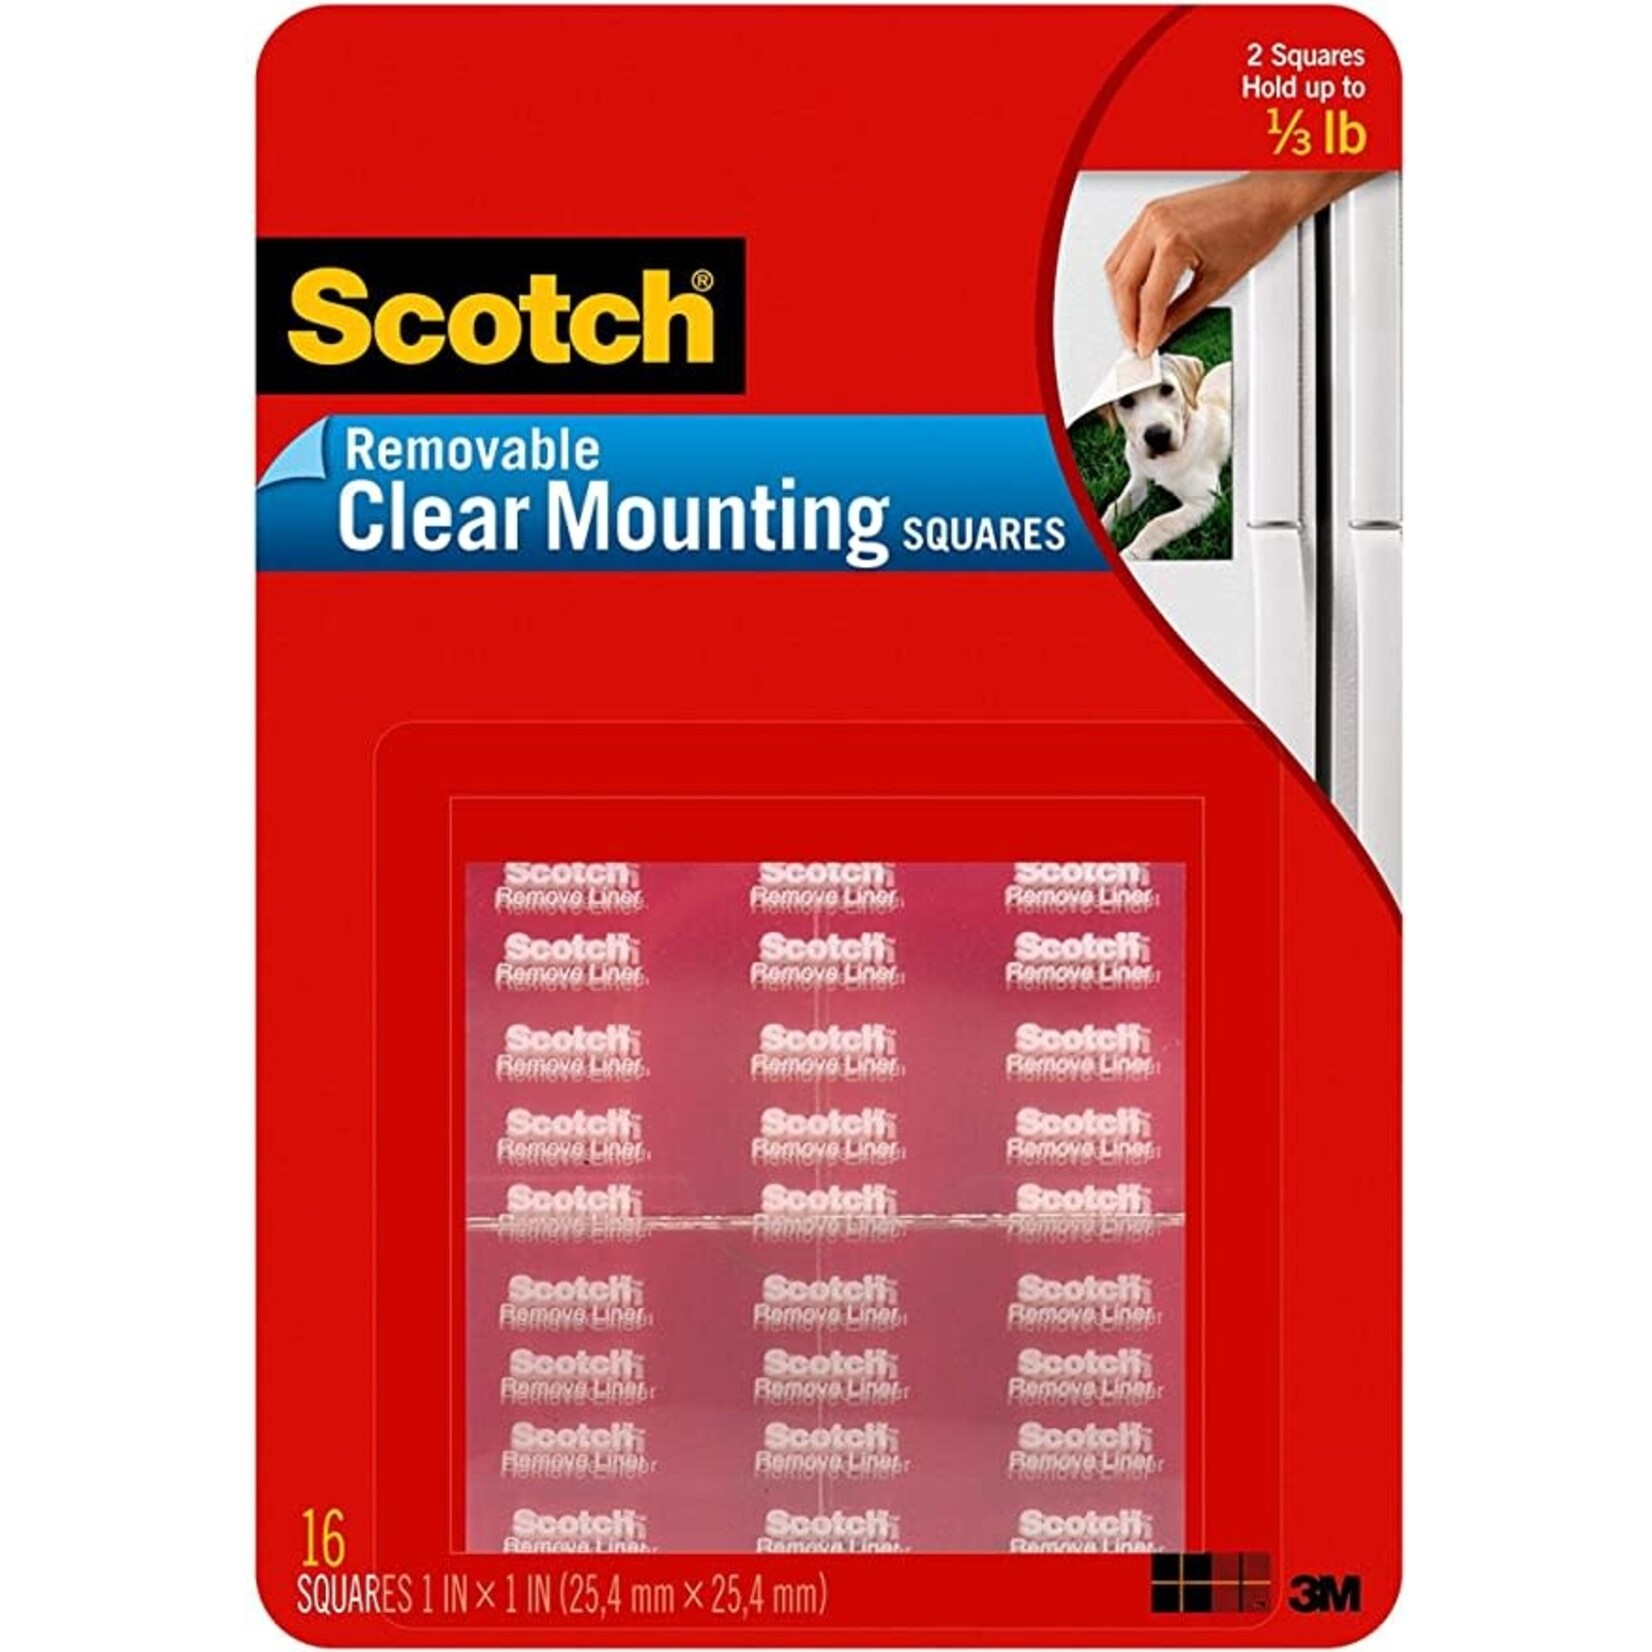 Scotch 3m Scotch Clear Removable Mounting Squares, Squares Measure 11/16''